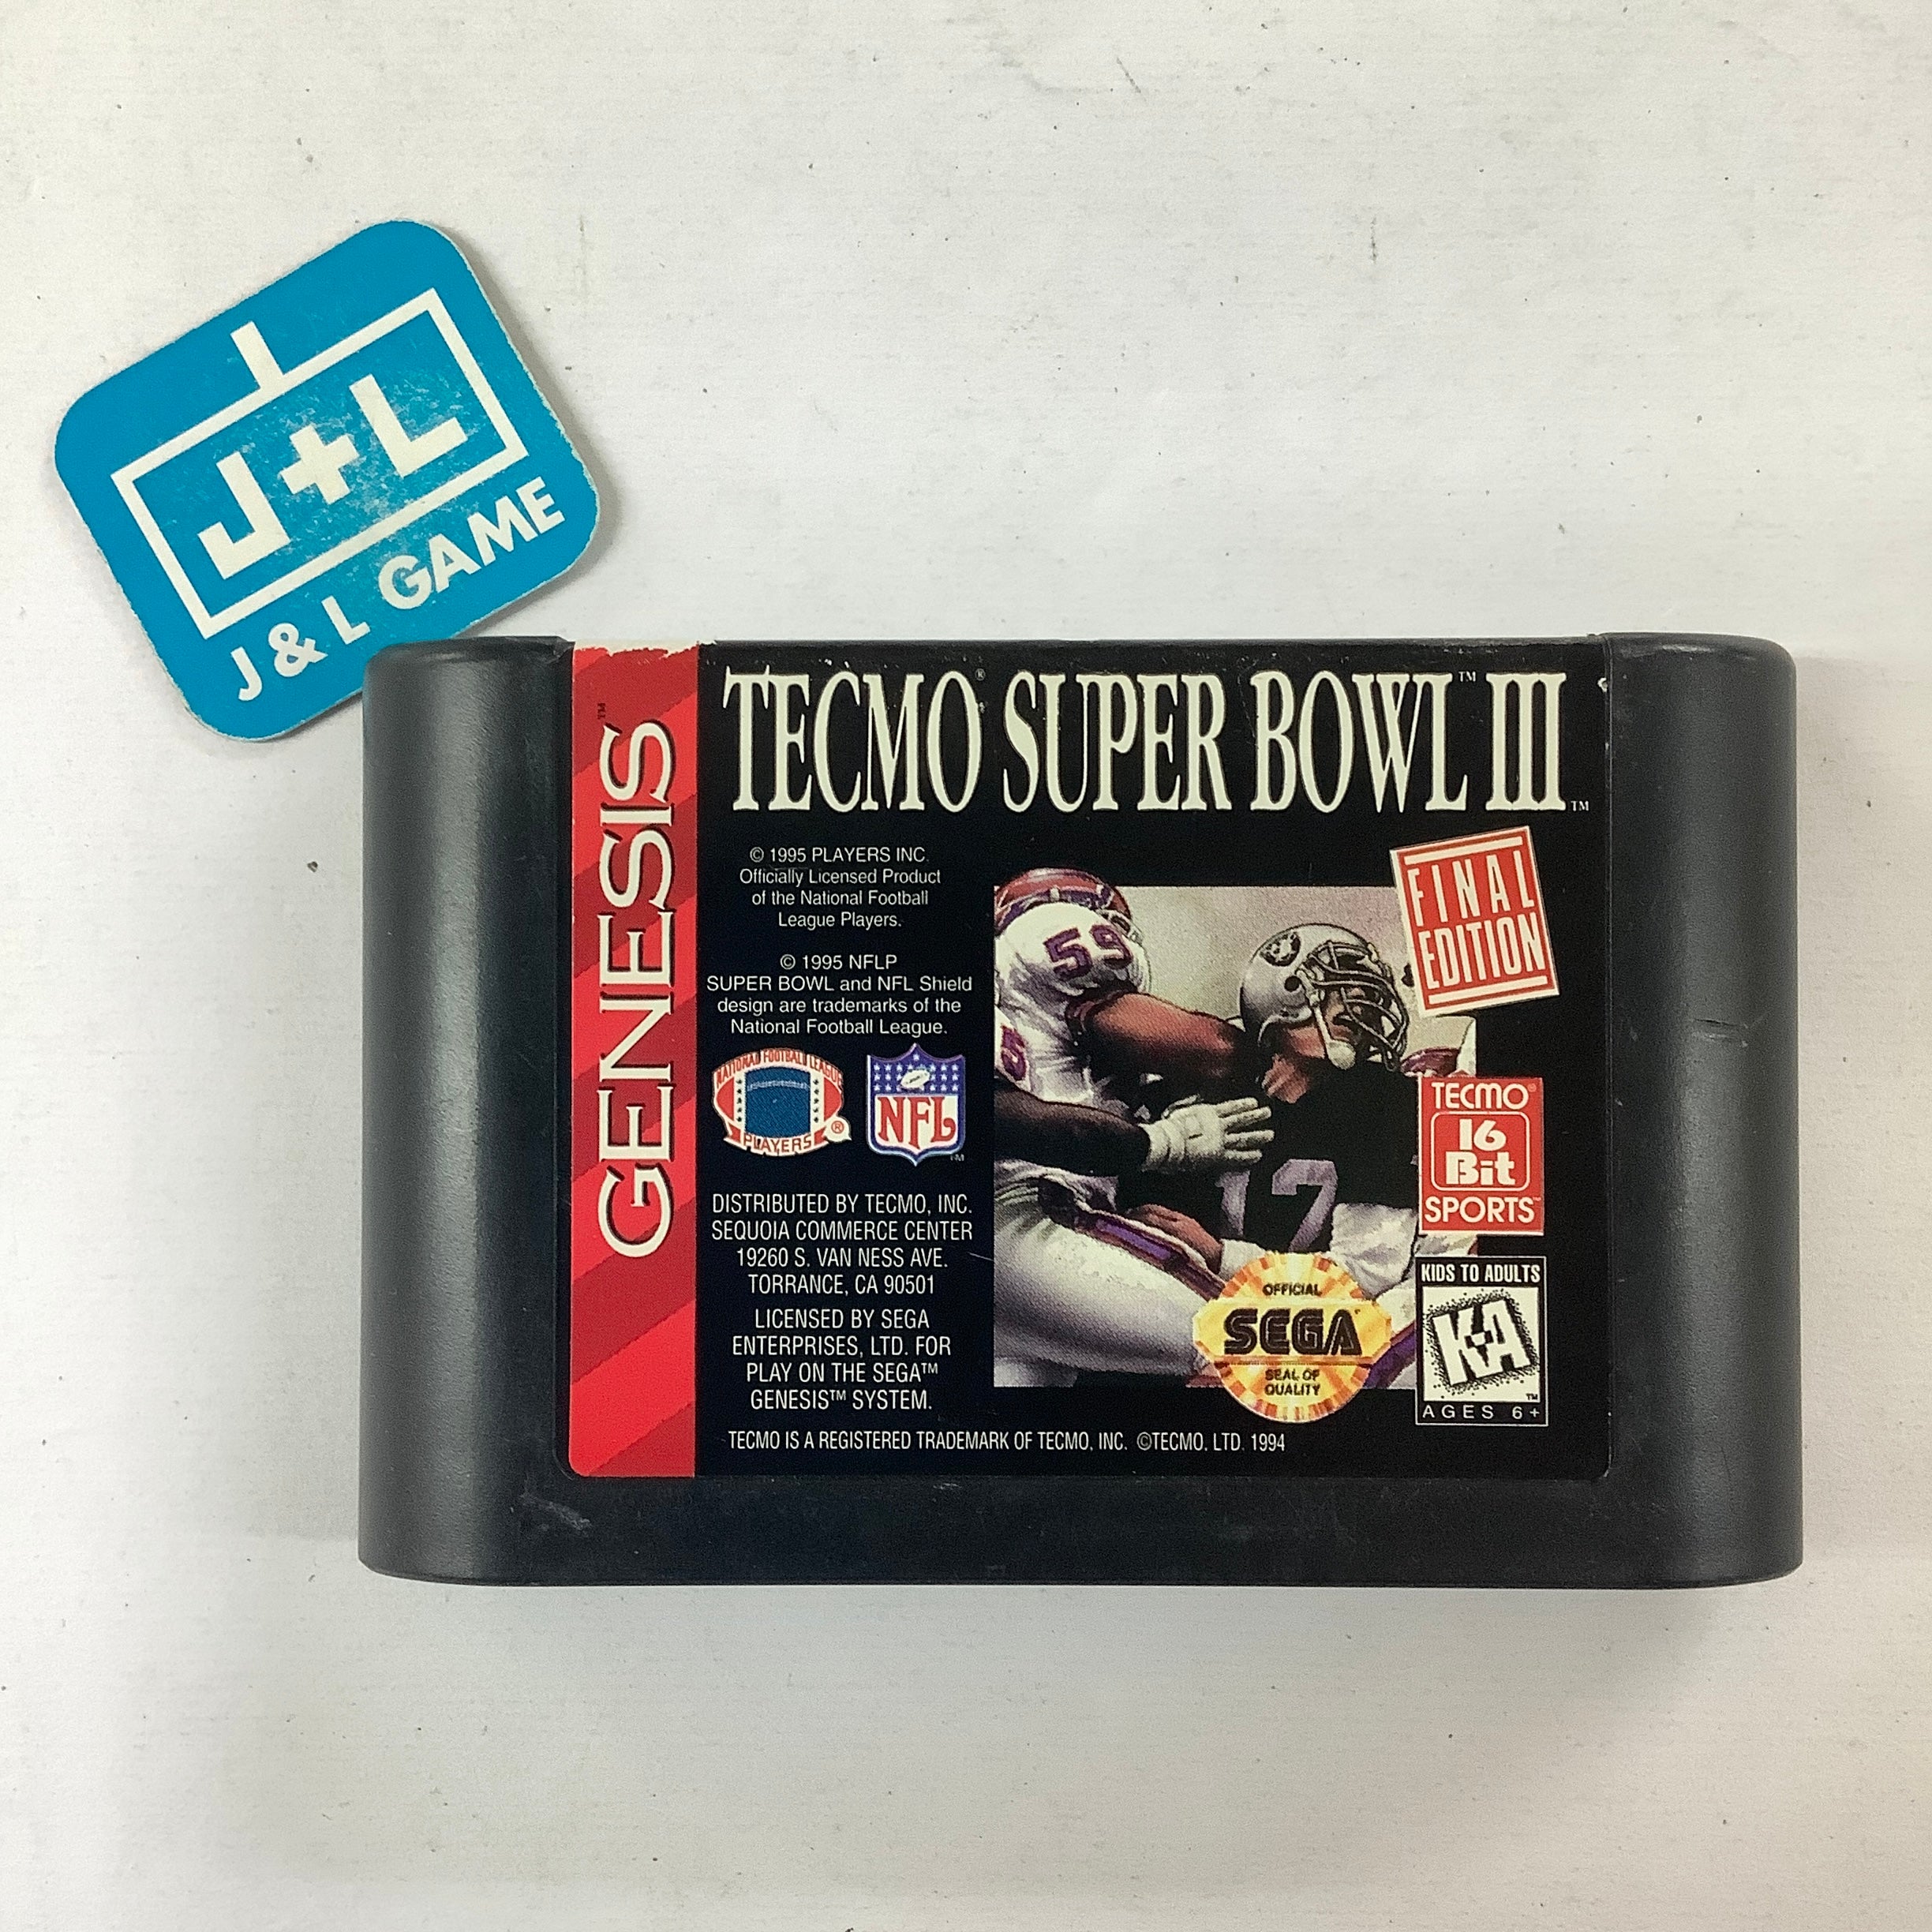 Tecmo Super Bowl III: Final Edition - SEGA Genesis [Pre-Owned] Video Games Tecmo   